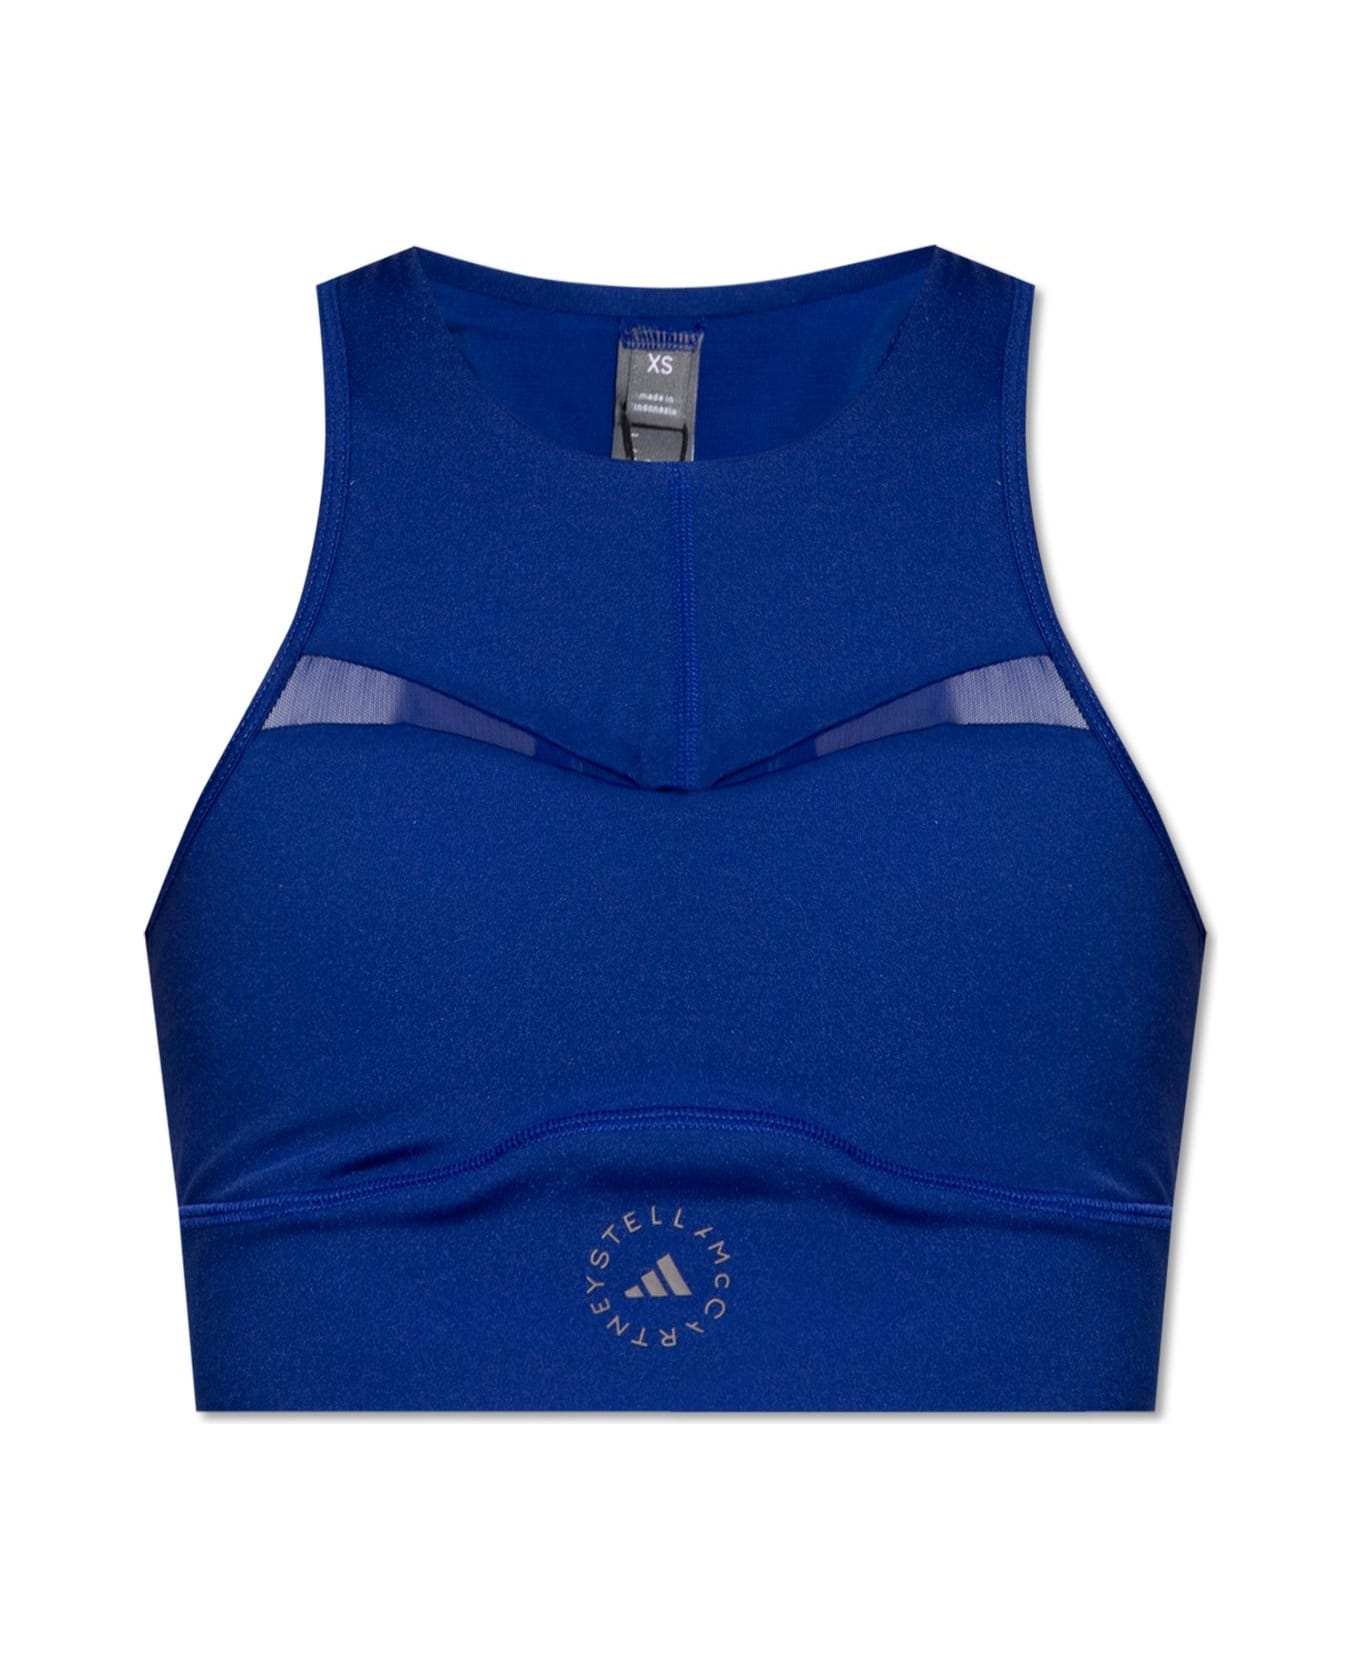 Adidas by Stella McCartney Sleeveless Crop Top - Blue